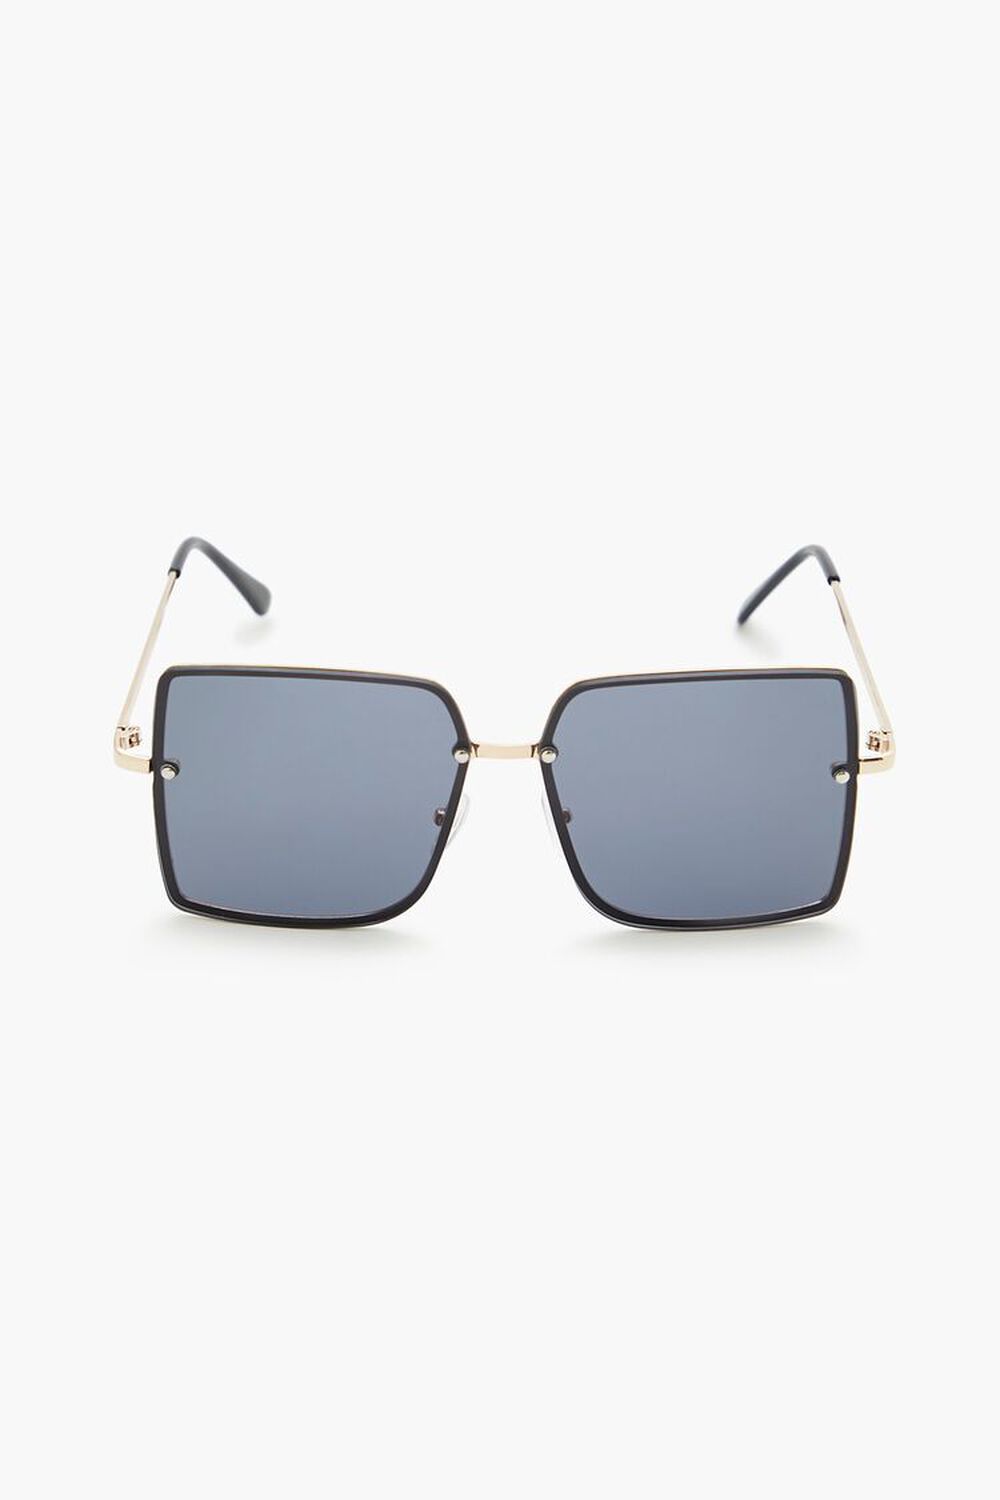 GOLD/BLACK Square Frame Sunglasses, image 1